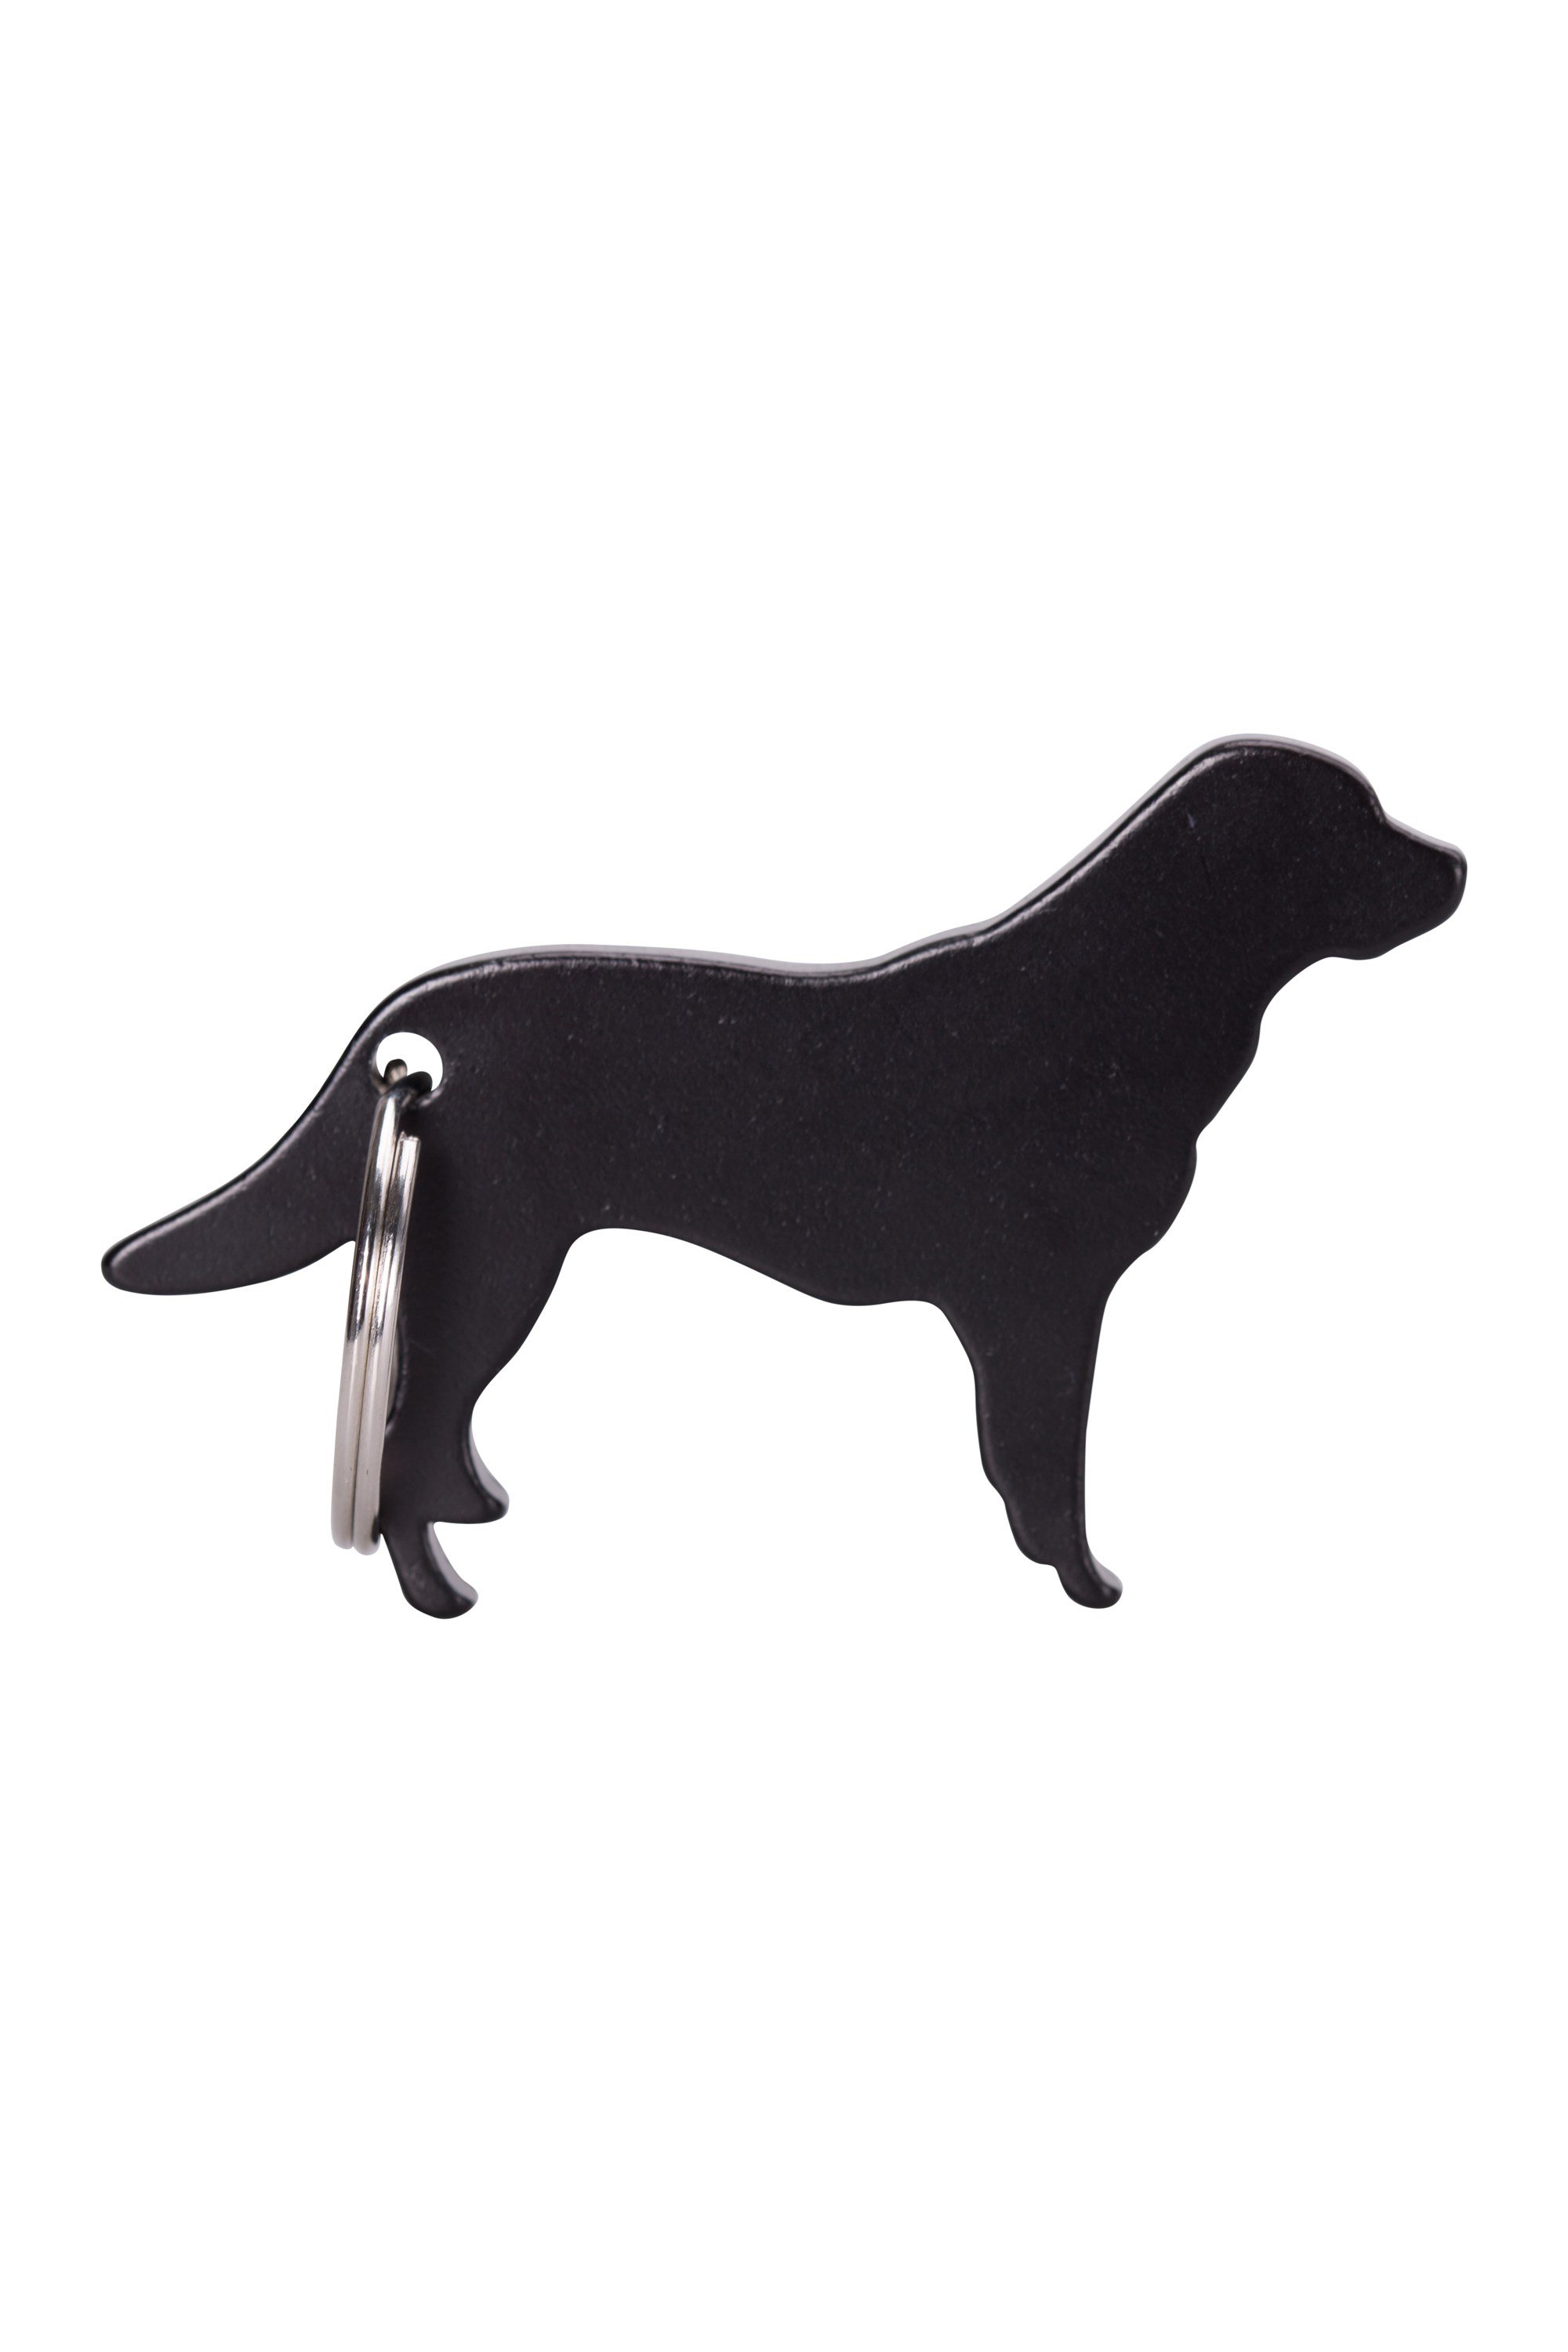 Black Greyhound Dog Chrome Metal Bottle Opener Keyring in Box Gift Ma AD-GH8MBO 